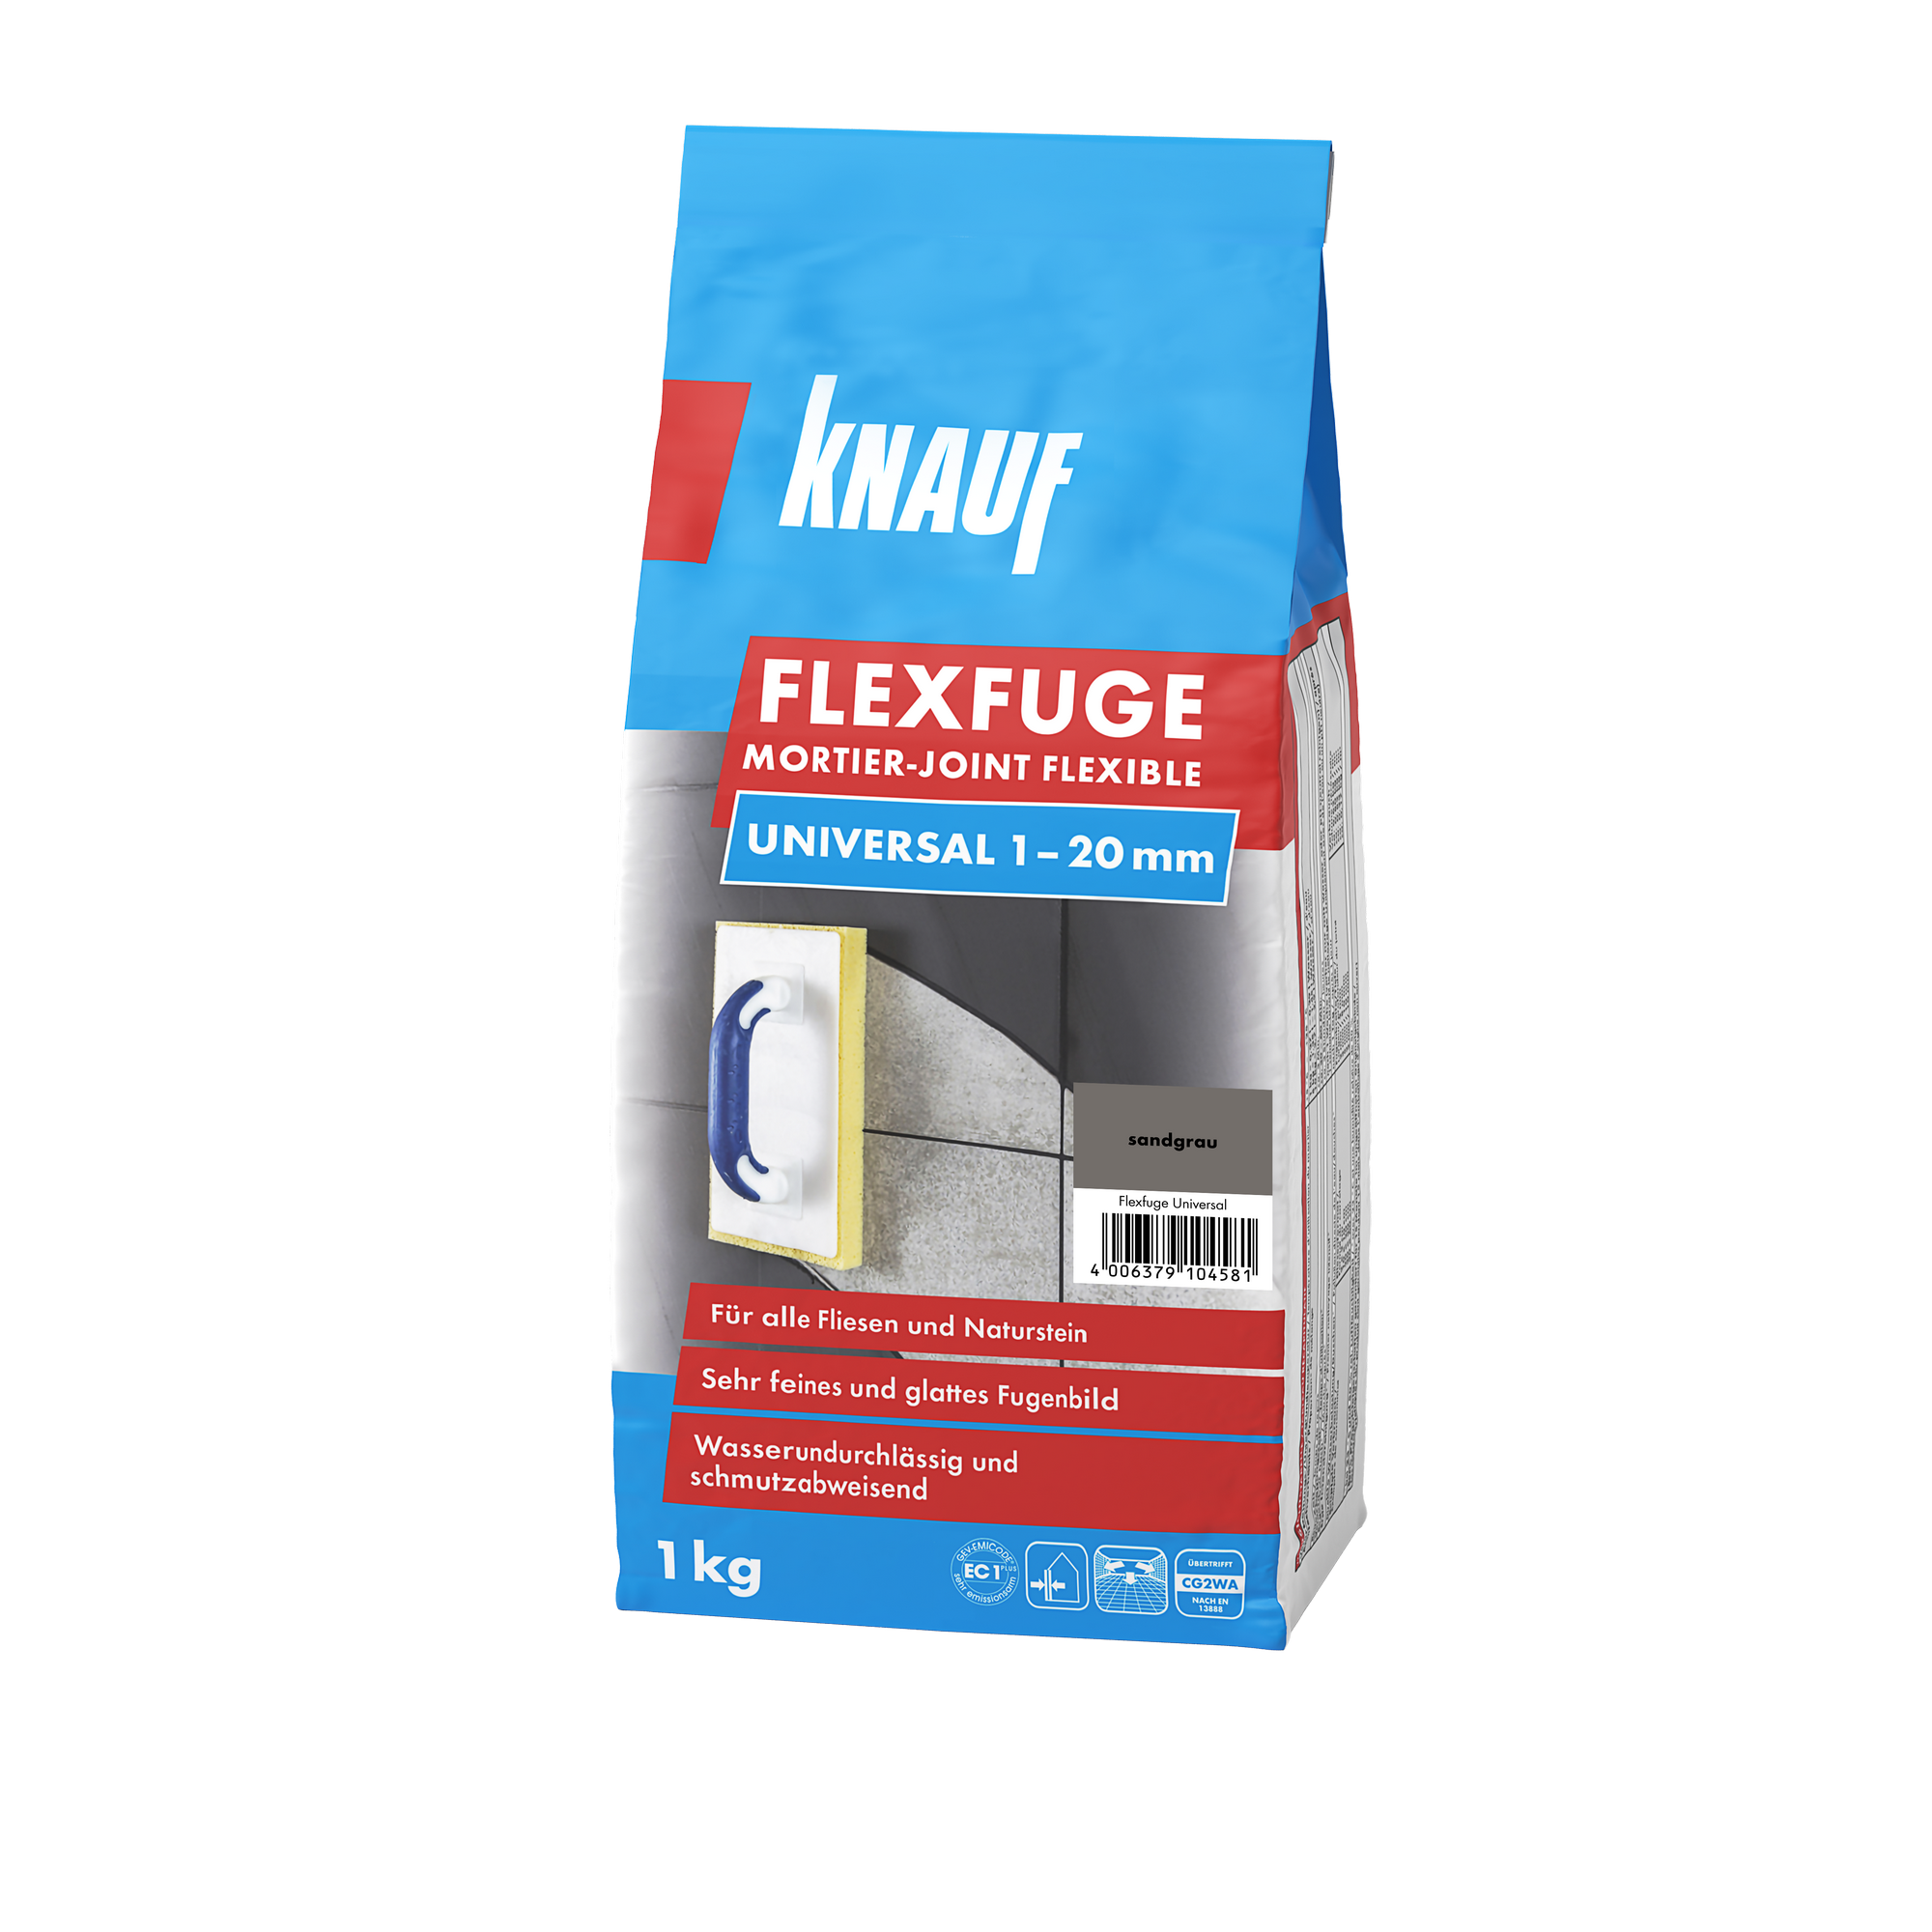 Flexfuge 'Universal' sandgrau 1 kg + product picture